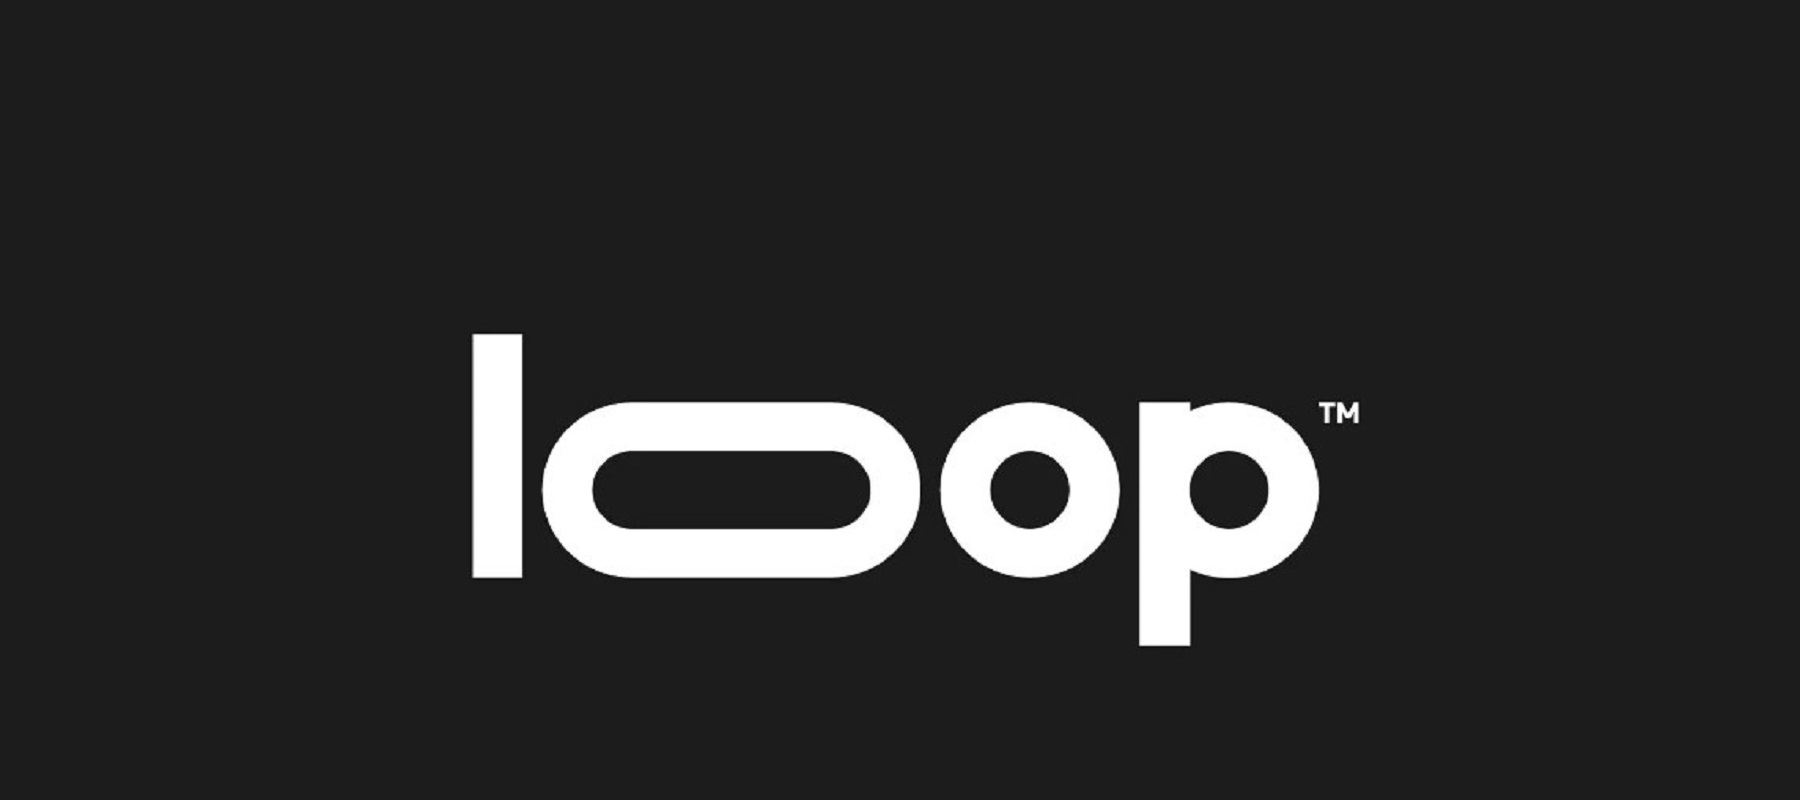 Loop Media migrates its platform infrastructure to Amazon Web Services